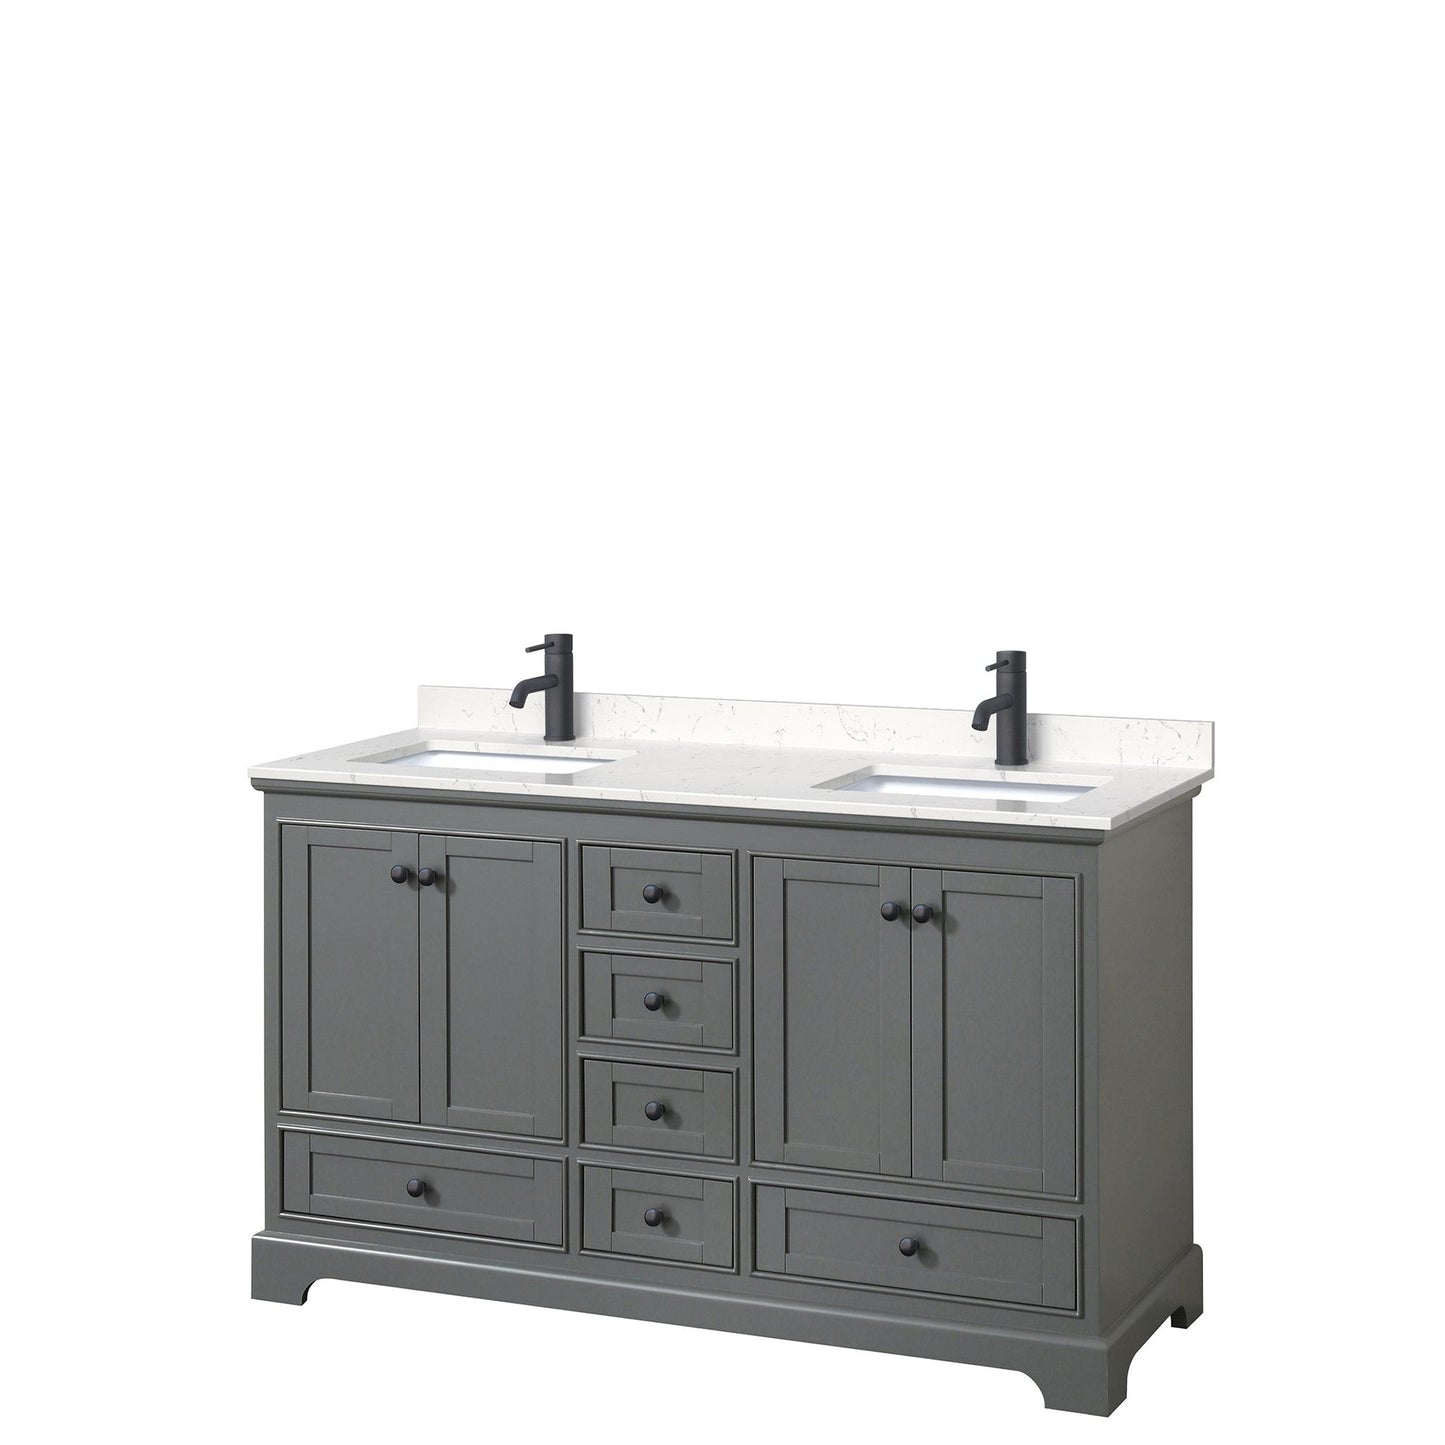 Deborah 60" Double Bathroom Vanity in Dark Gray, Carrara Cultured Marble Countertop, Undermount Square Sinks, Matte Black Trim